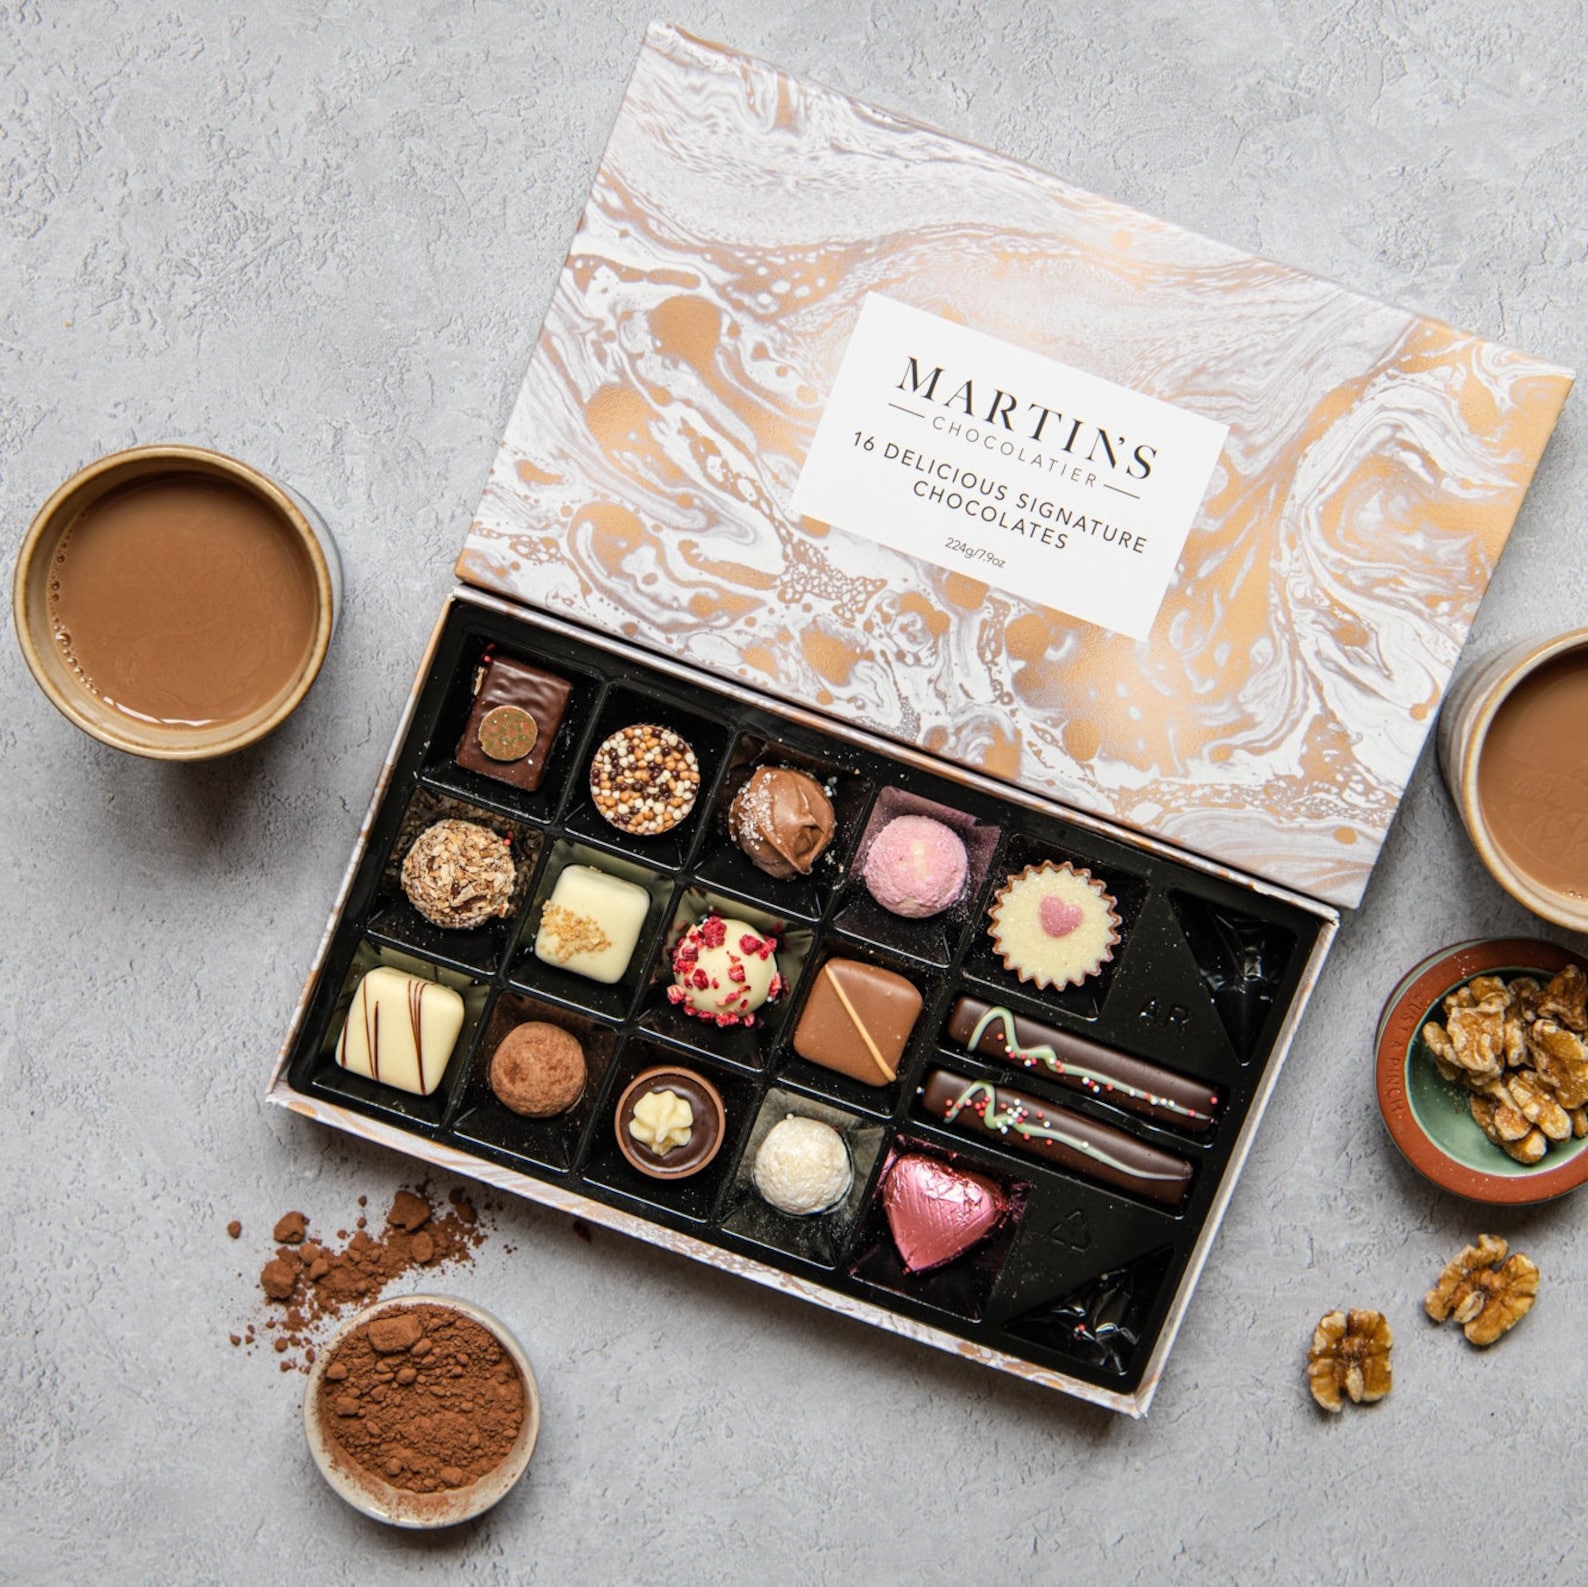 A box of 16 artisanal chocolates